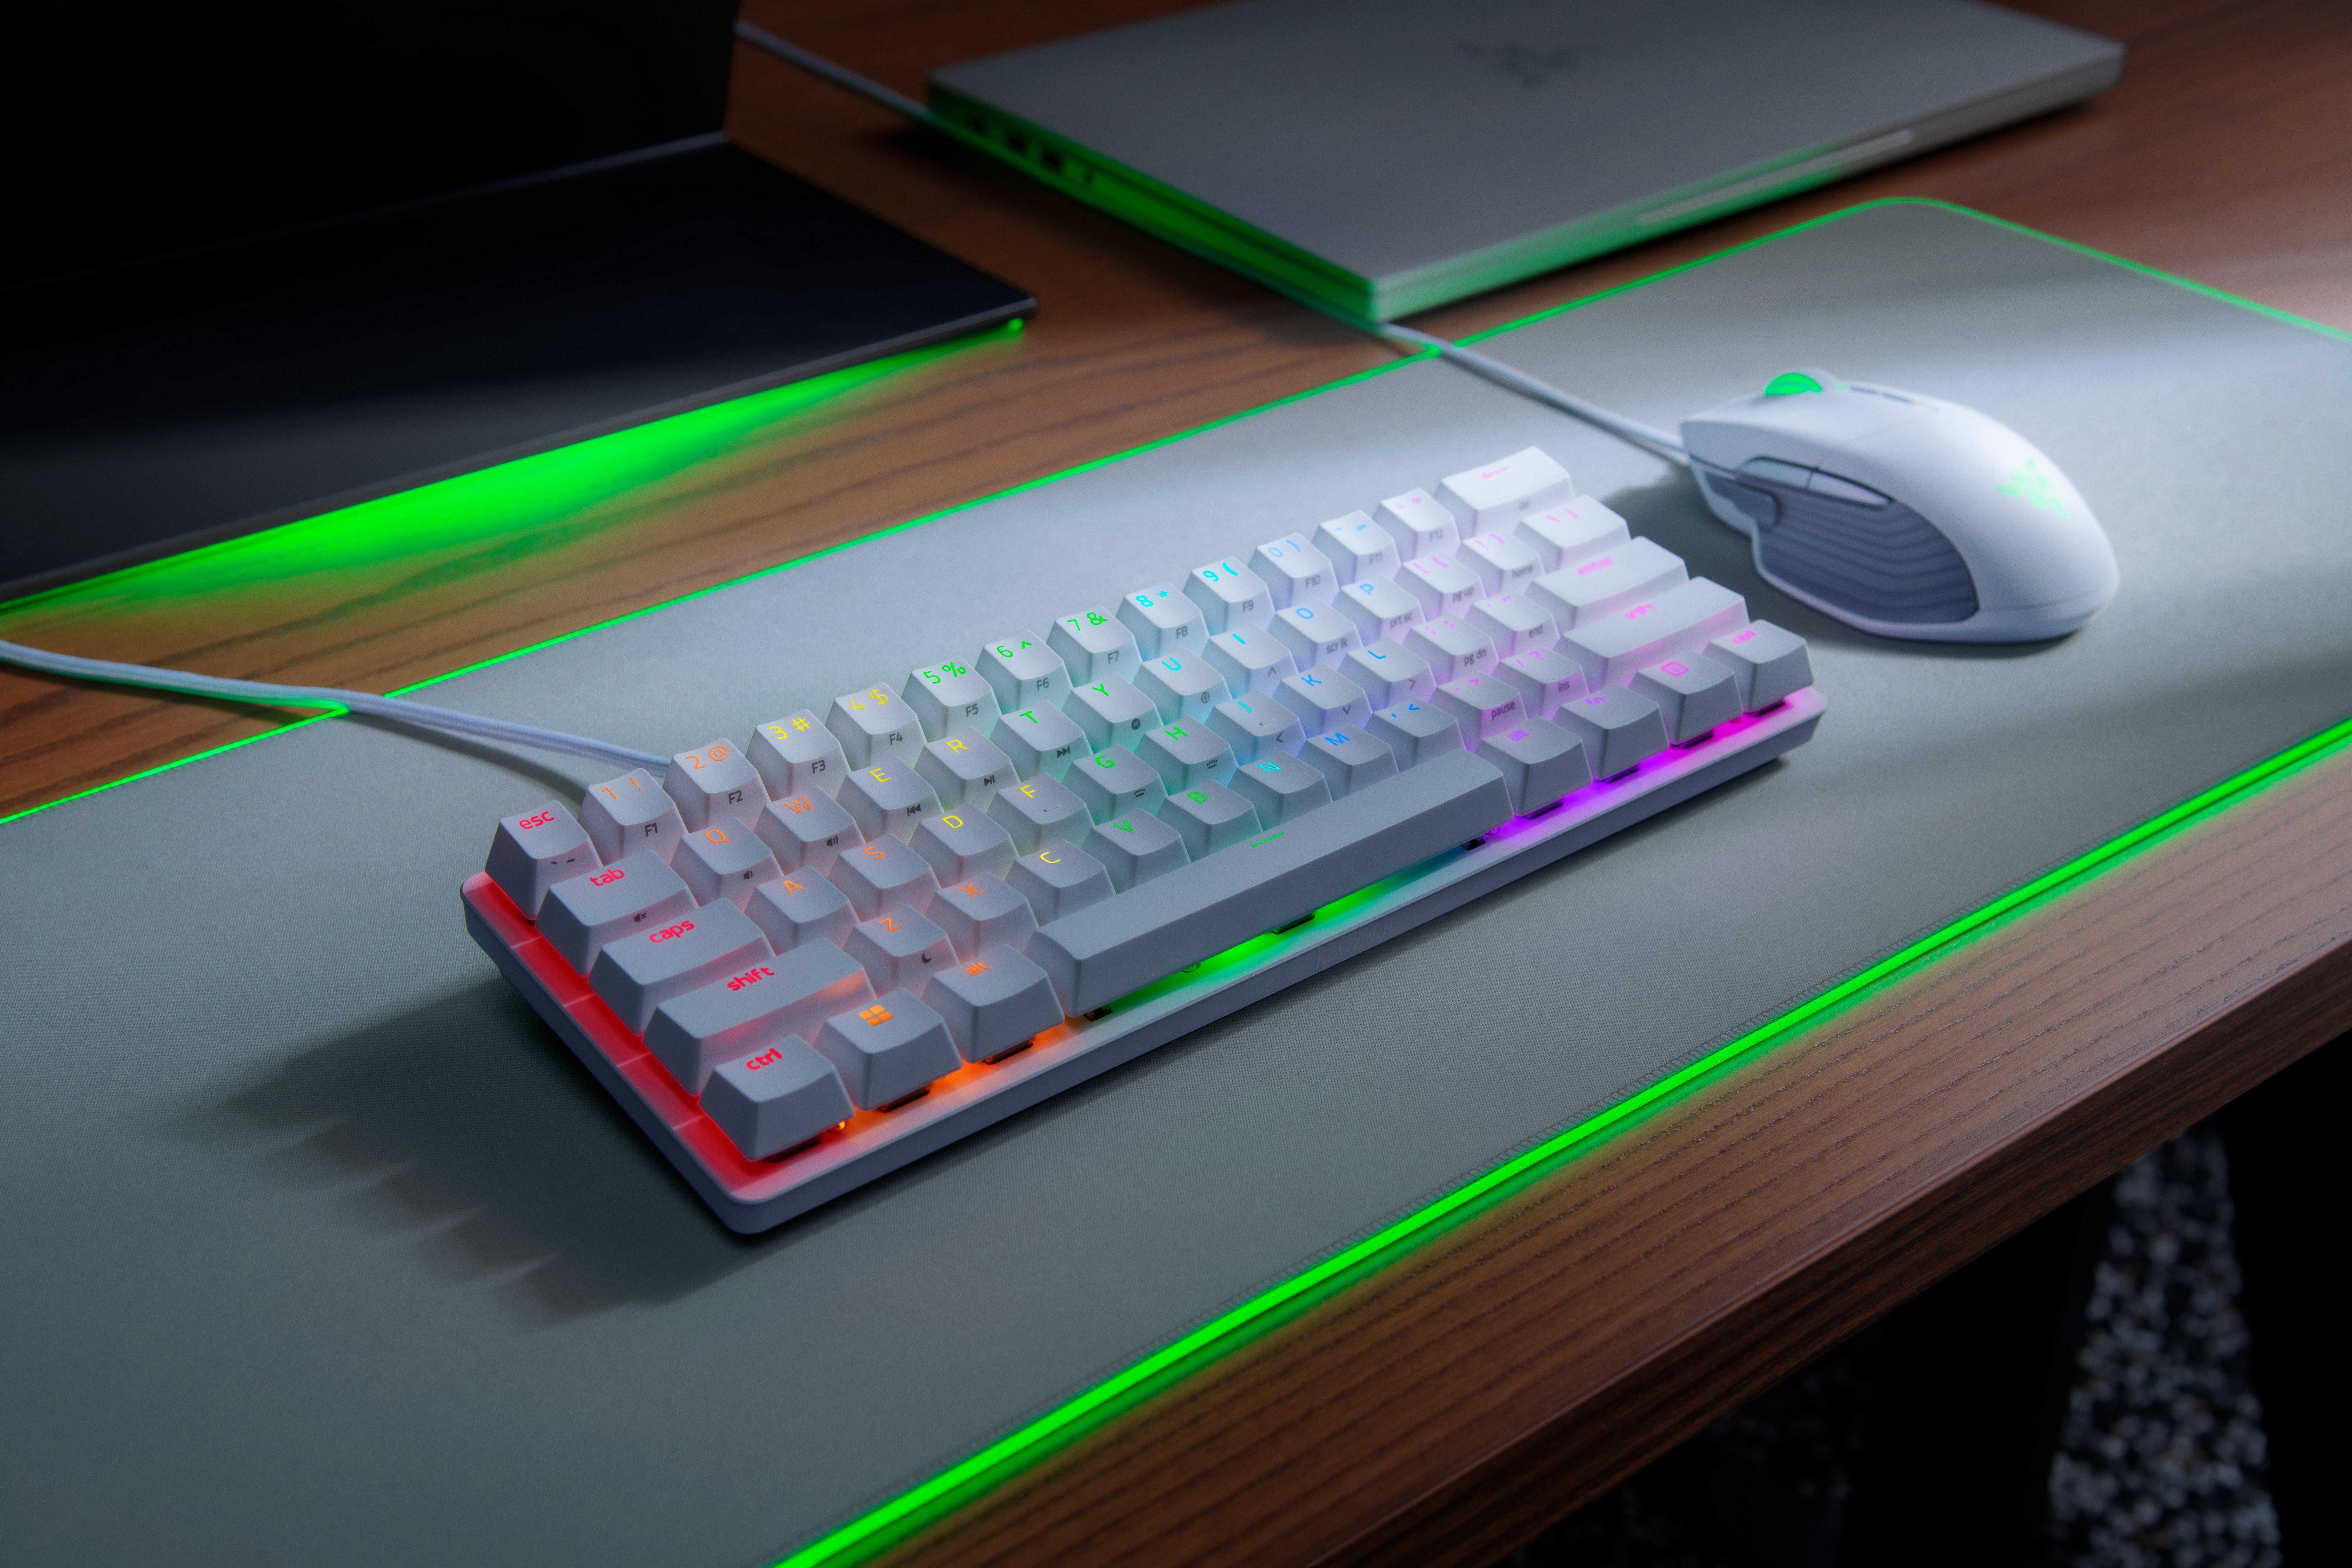 Razer Huntsman Mini Linear Optical Switch Gaming Keyboard